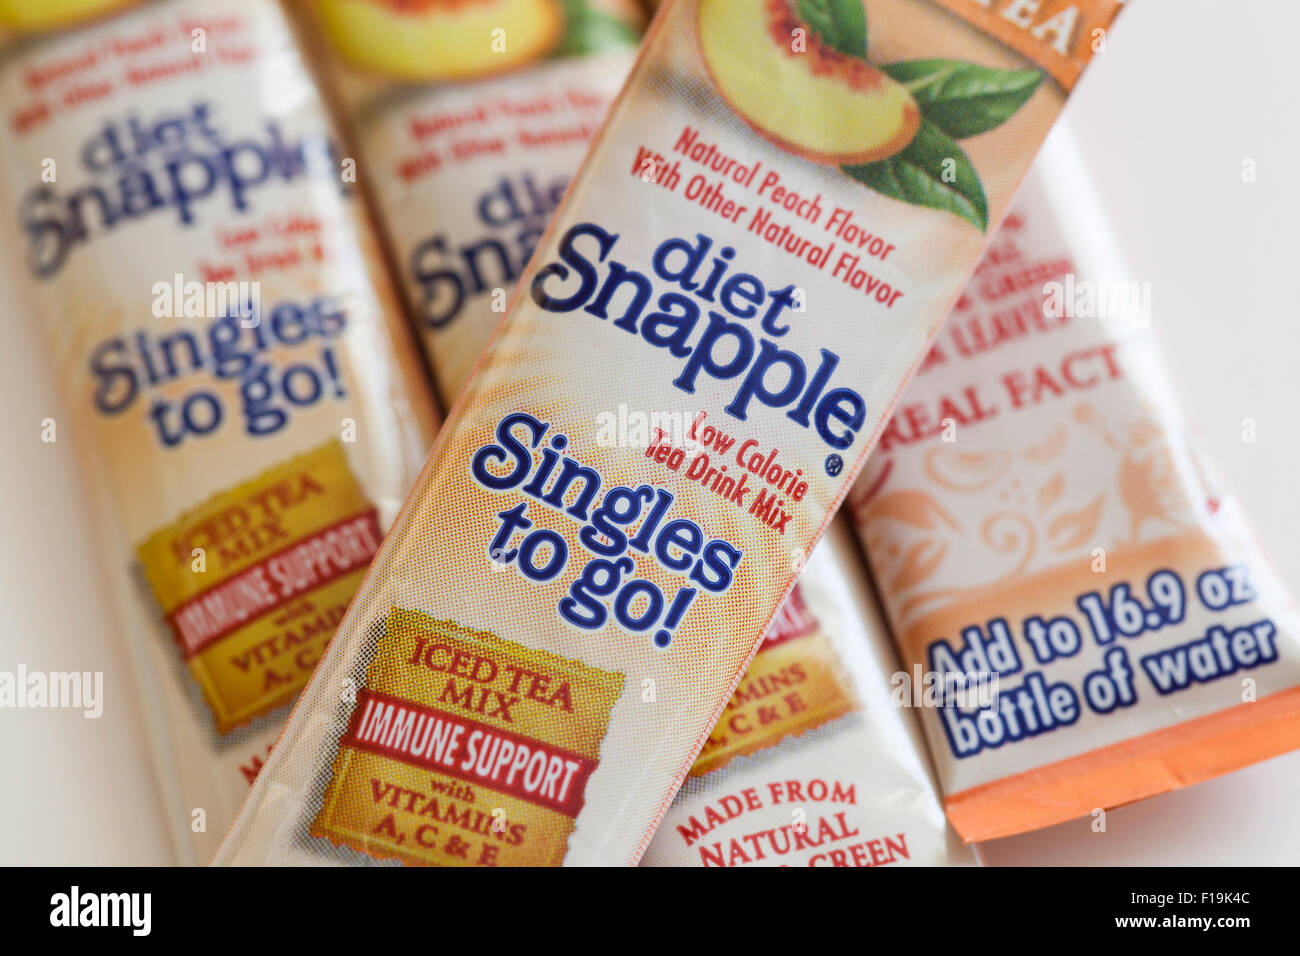 Diet Snapple Singles ir iced tea mezclar paquetes - EE.UU. Foto de stock